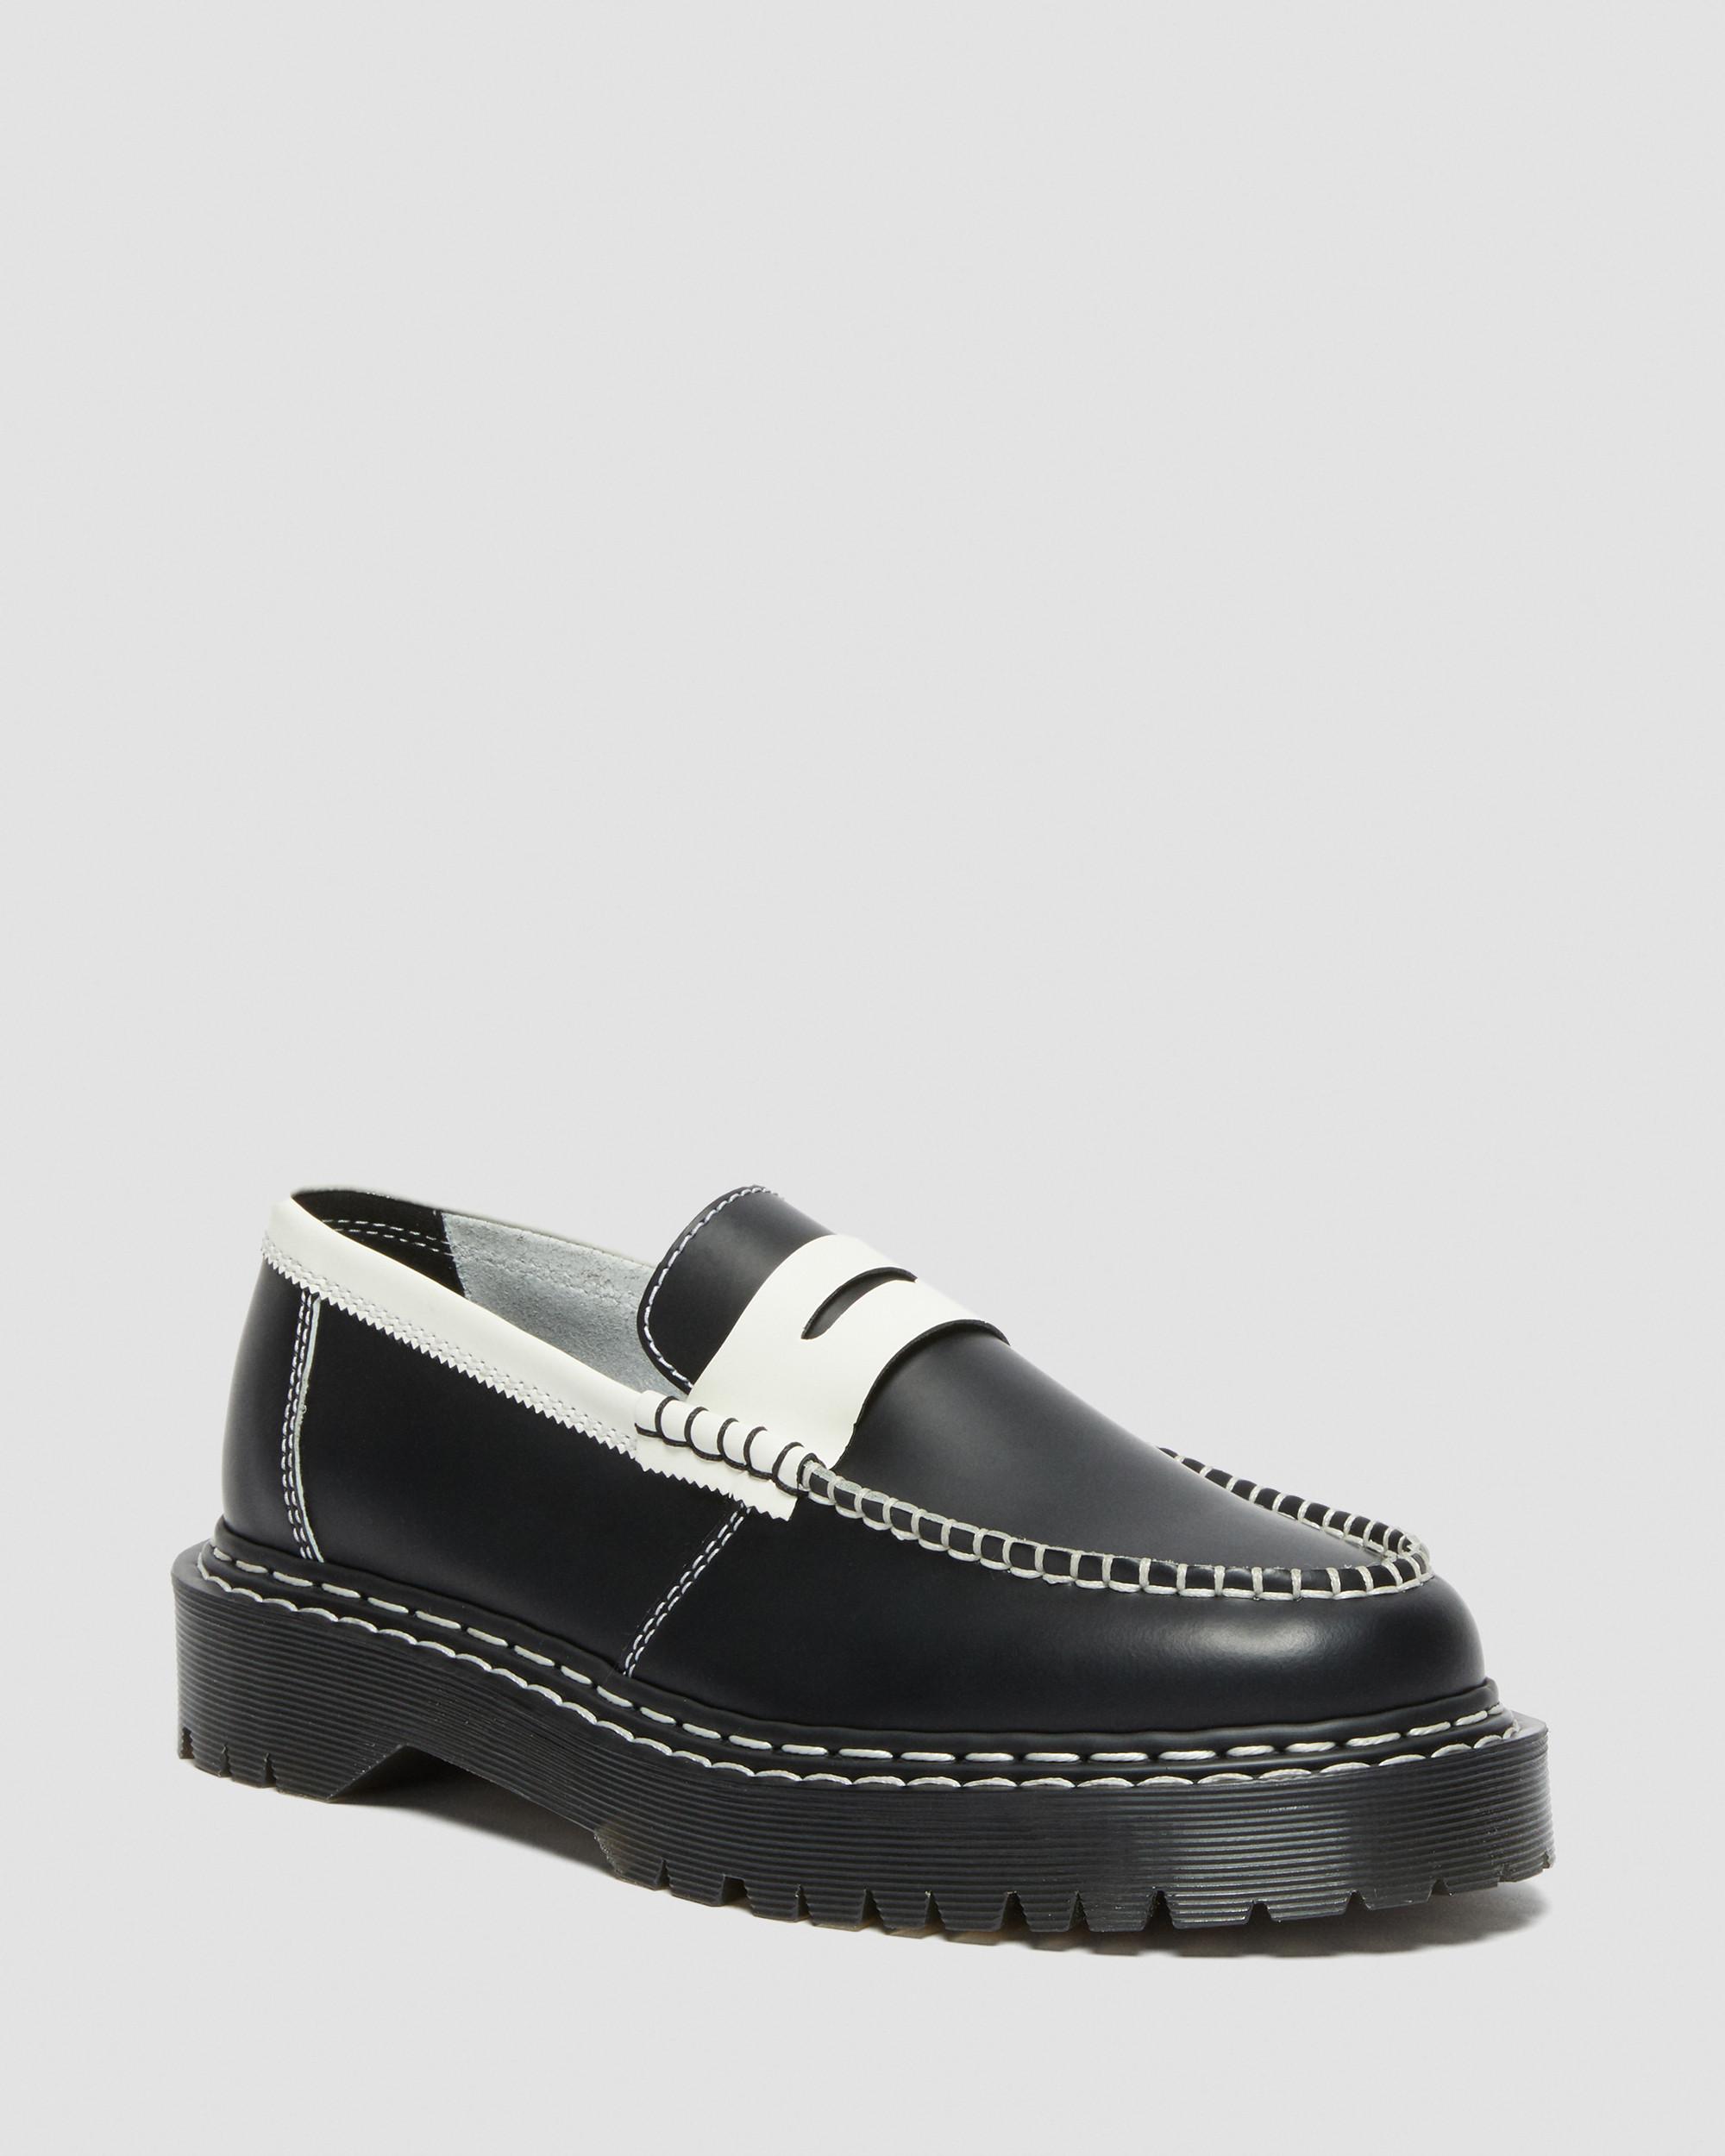 Penton Bex Contrast Leather Loafers, Black | Dr. Martens